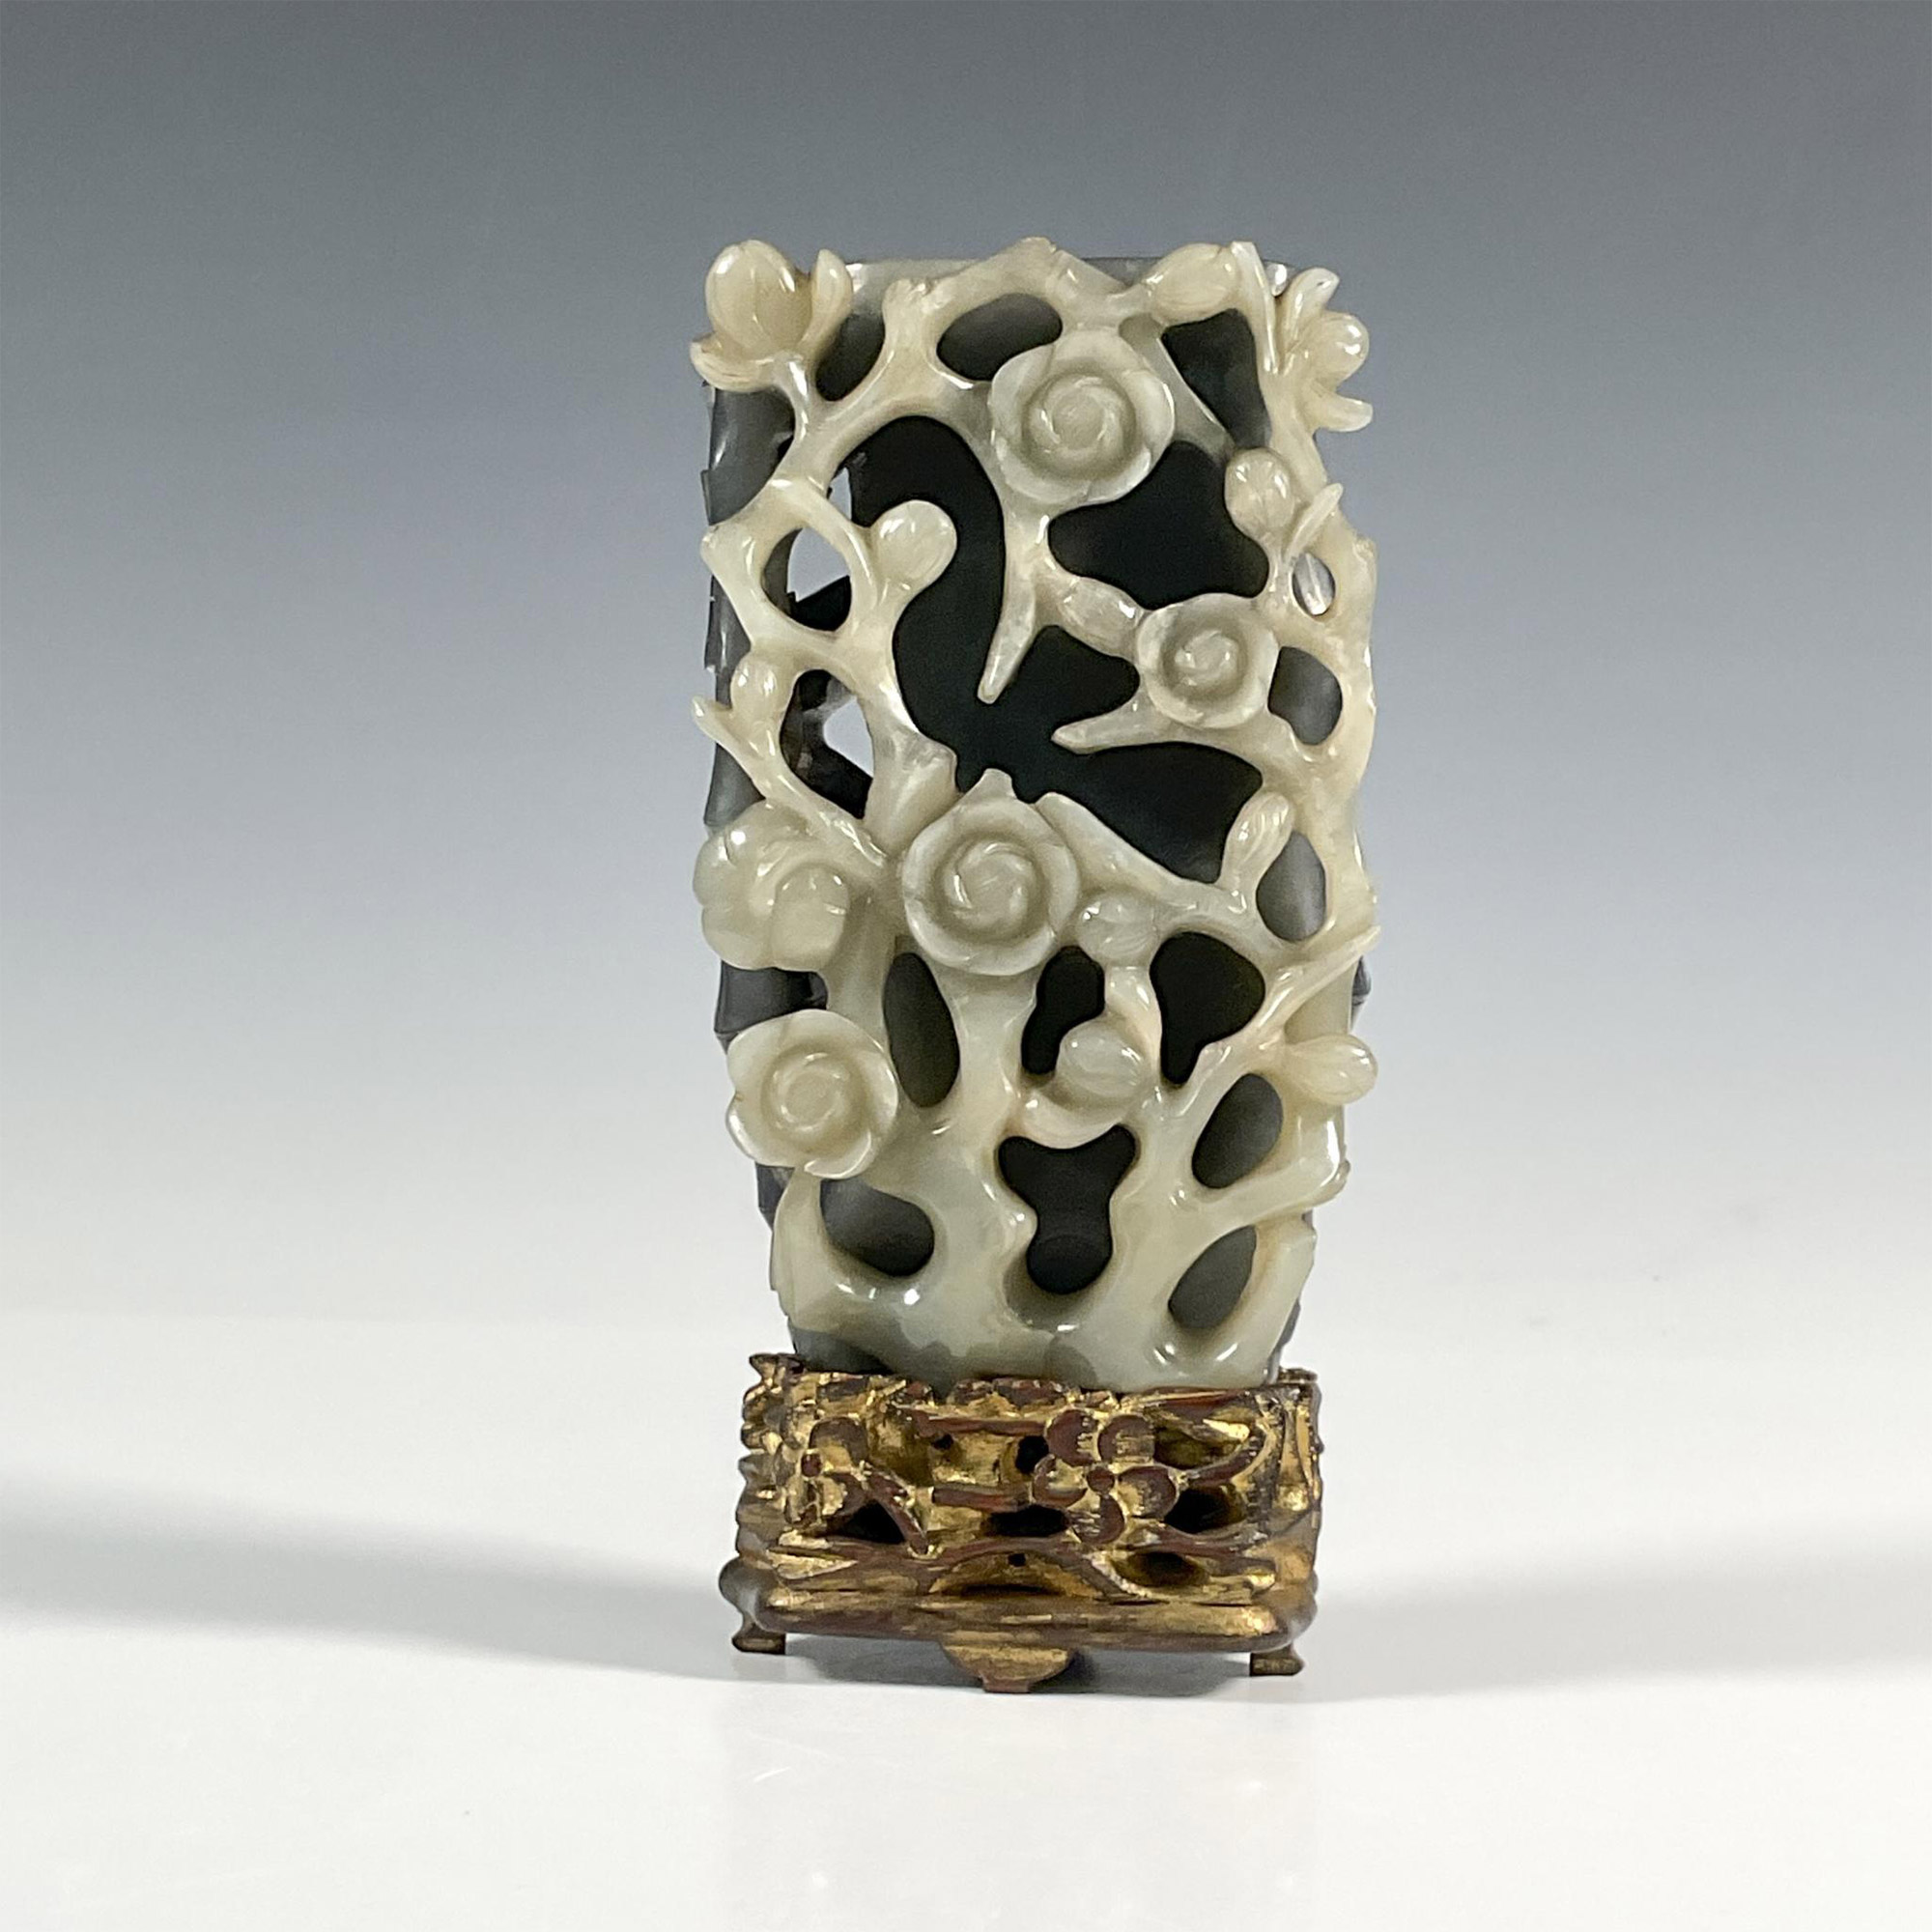 Antique Chinese Black and White Jade Vase - Image 2 of 3